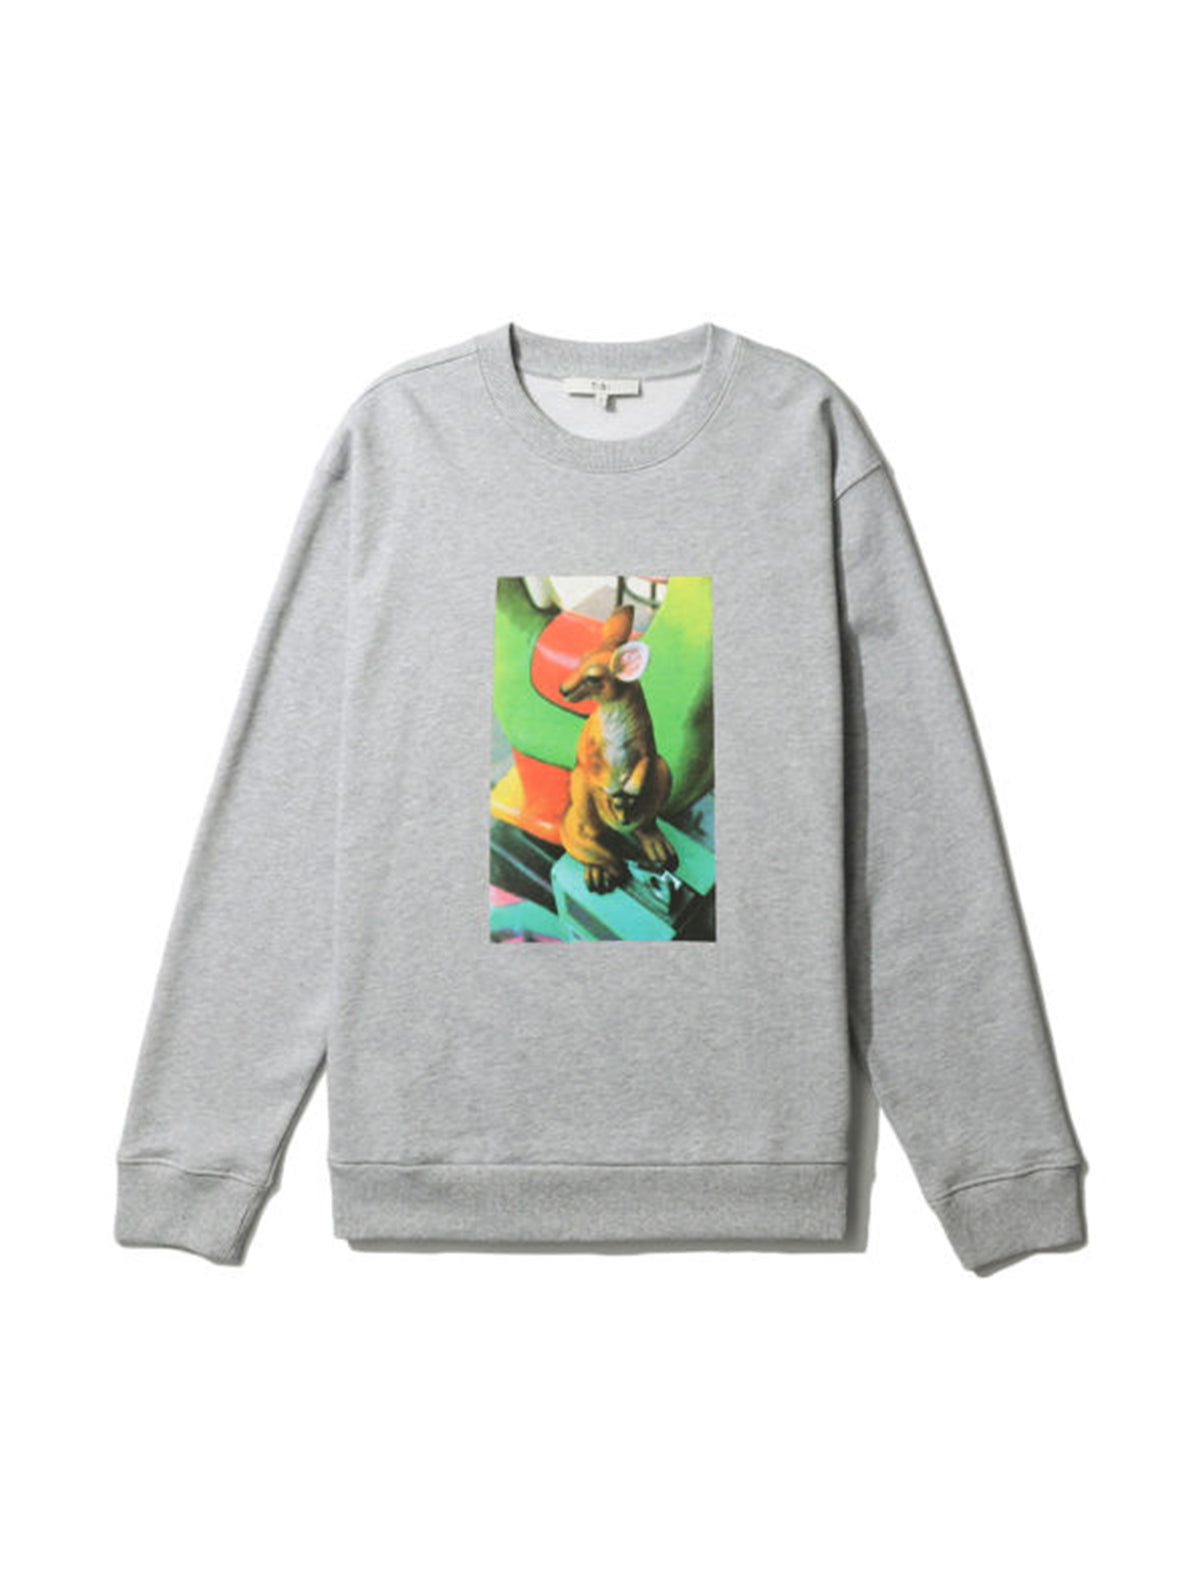 TIBI Kangaroo Series Sweatshirt in Heather Grey